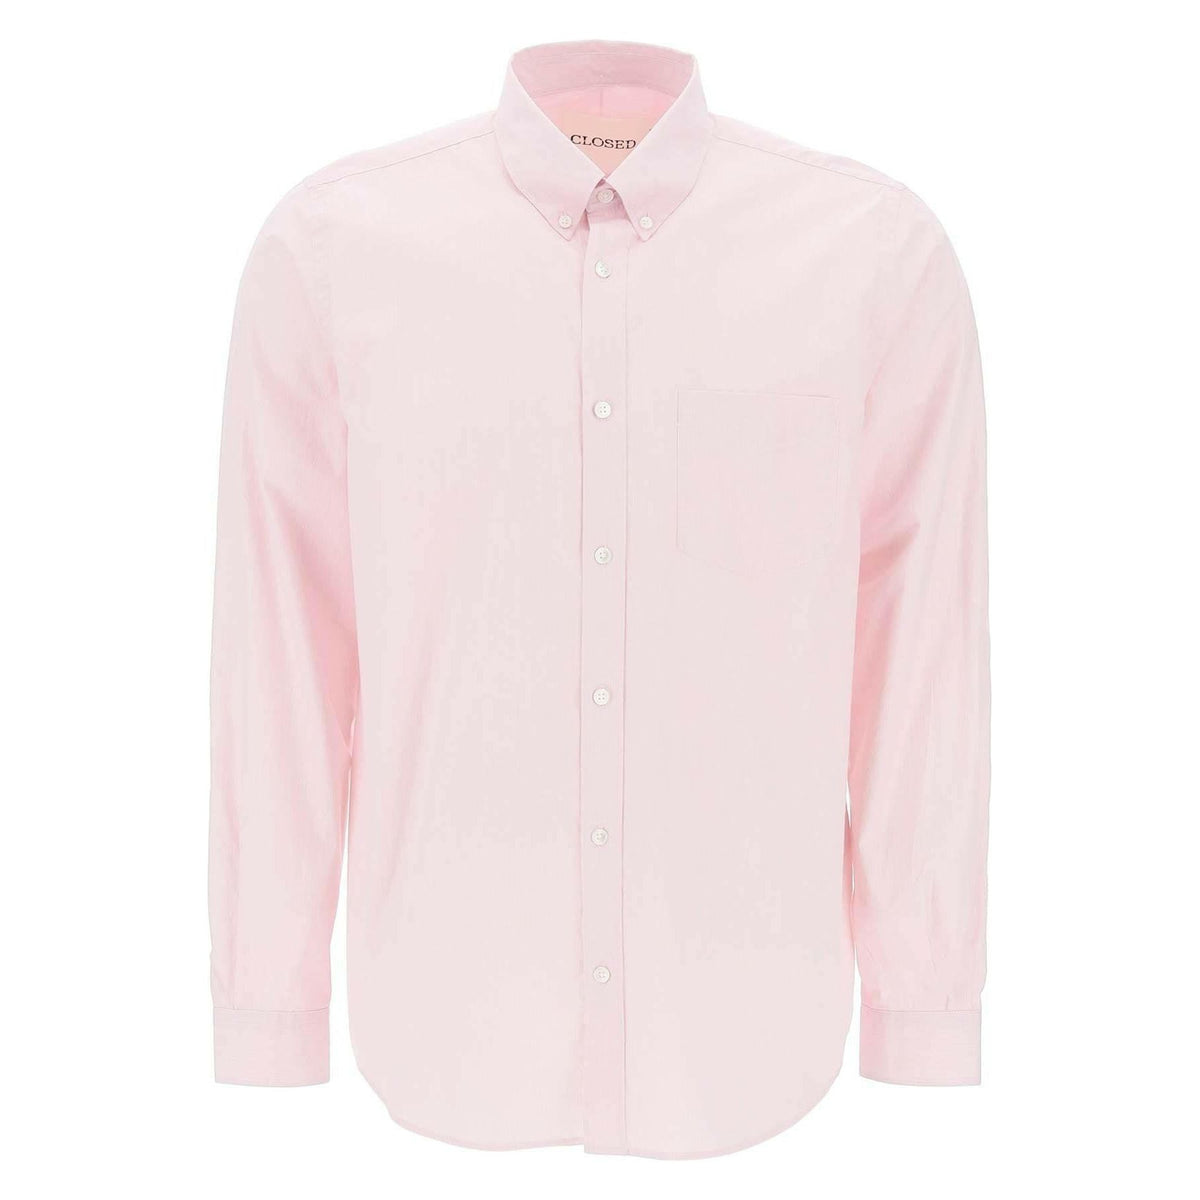 CLOSED - Smoothie Pink Striped Cotton Poplin Button-Up Shirt - JOHN JULIA